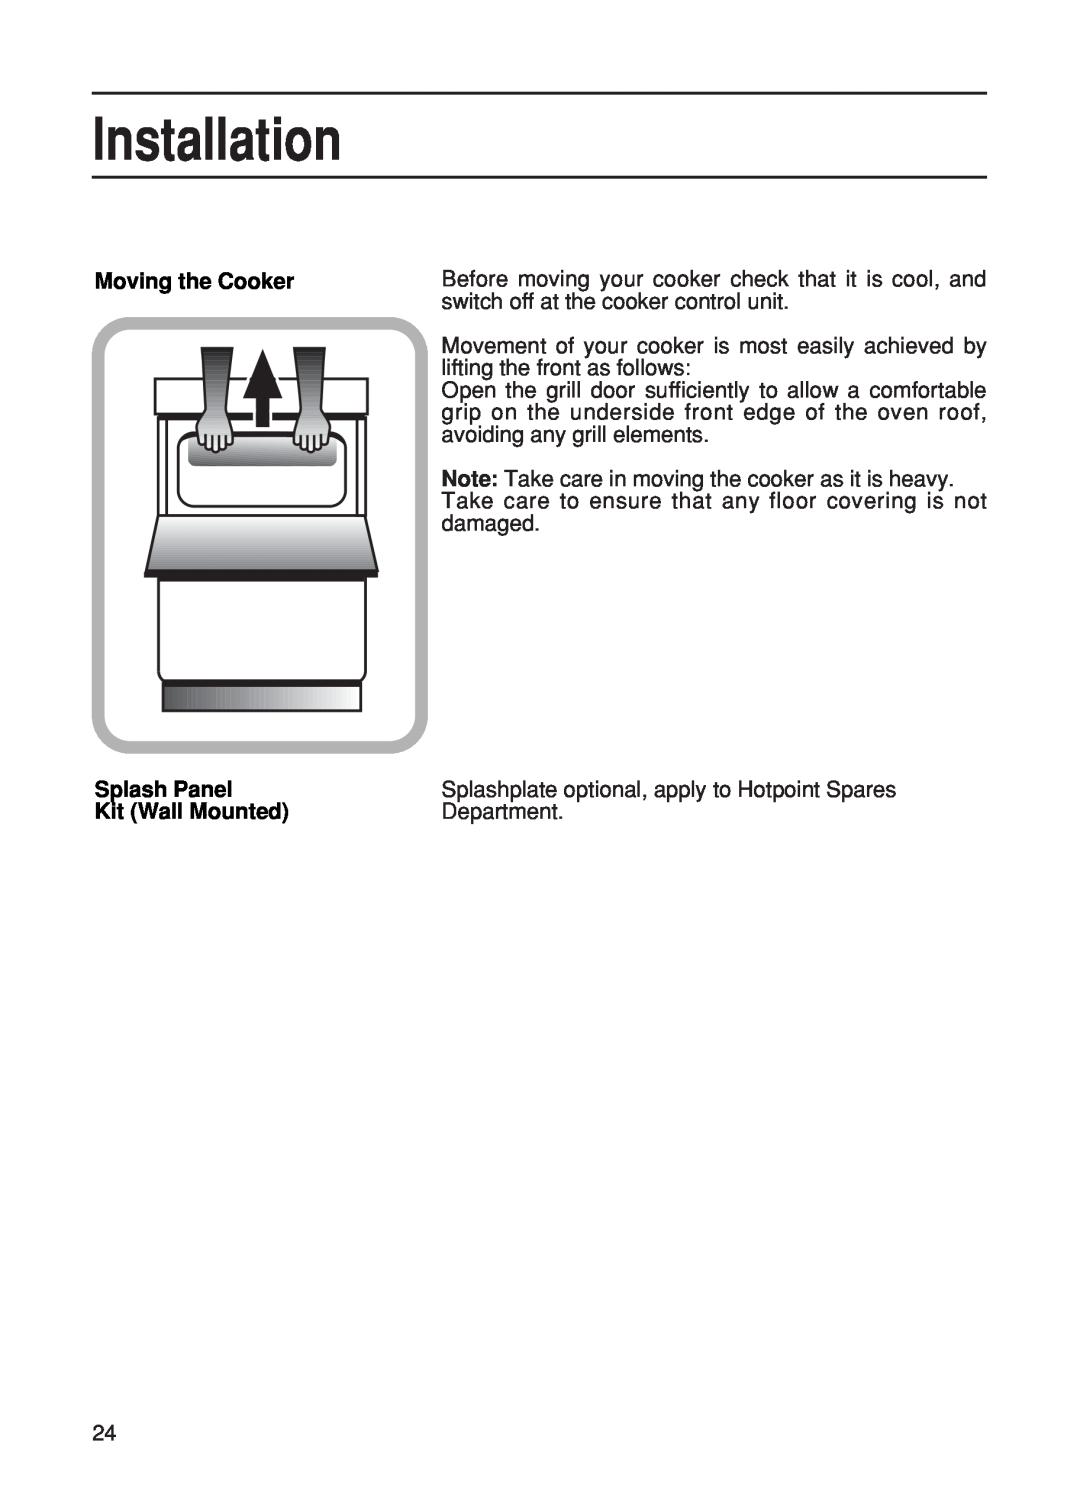 Hotpoint EG21 manual Installation, Moving the Cooker Splash Panel Kit Wall Mounted 